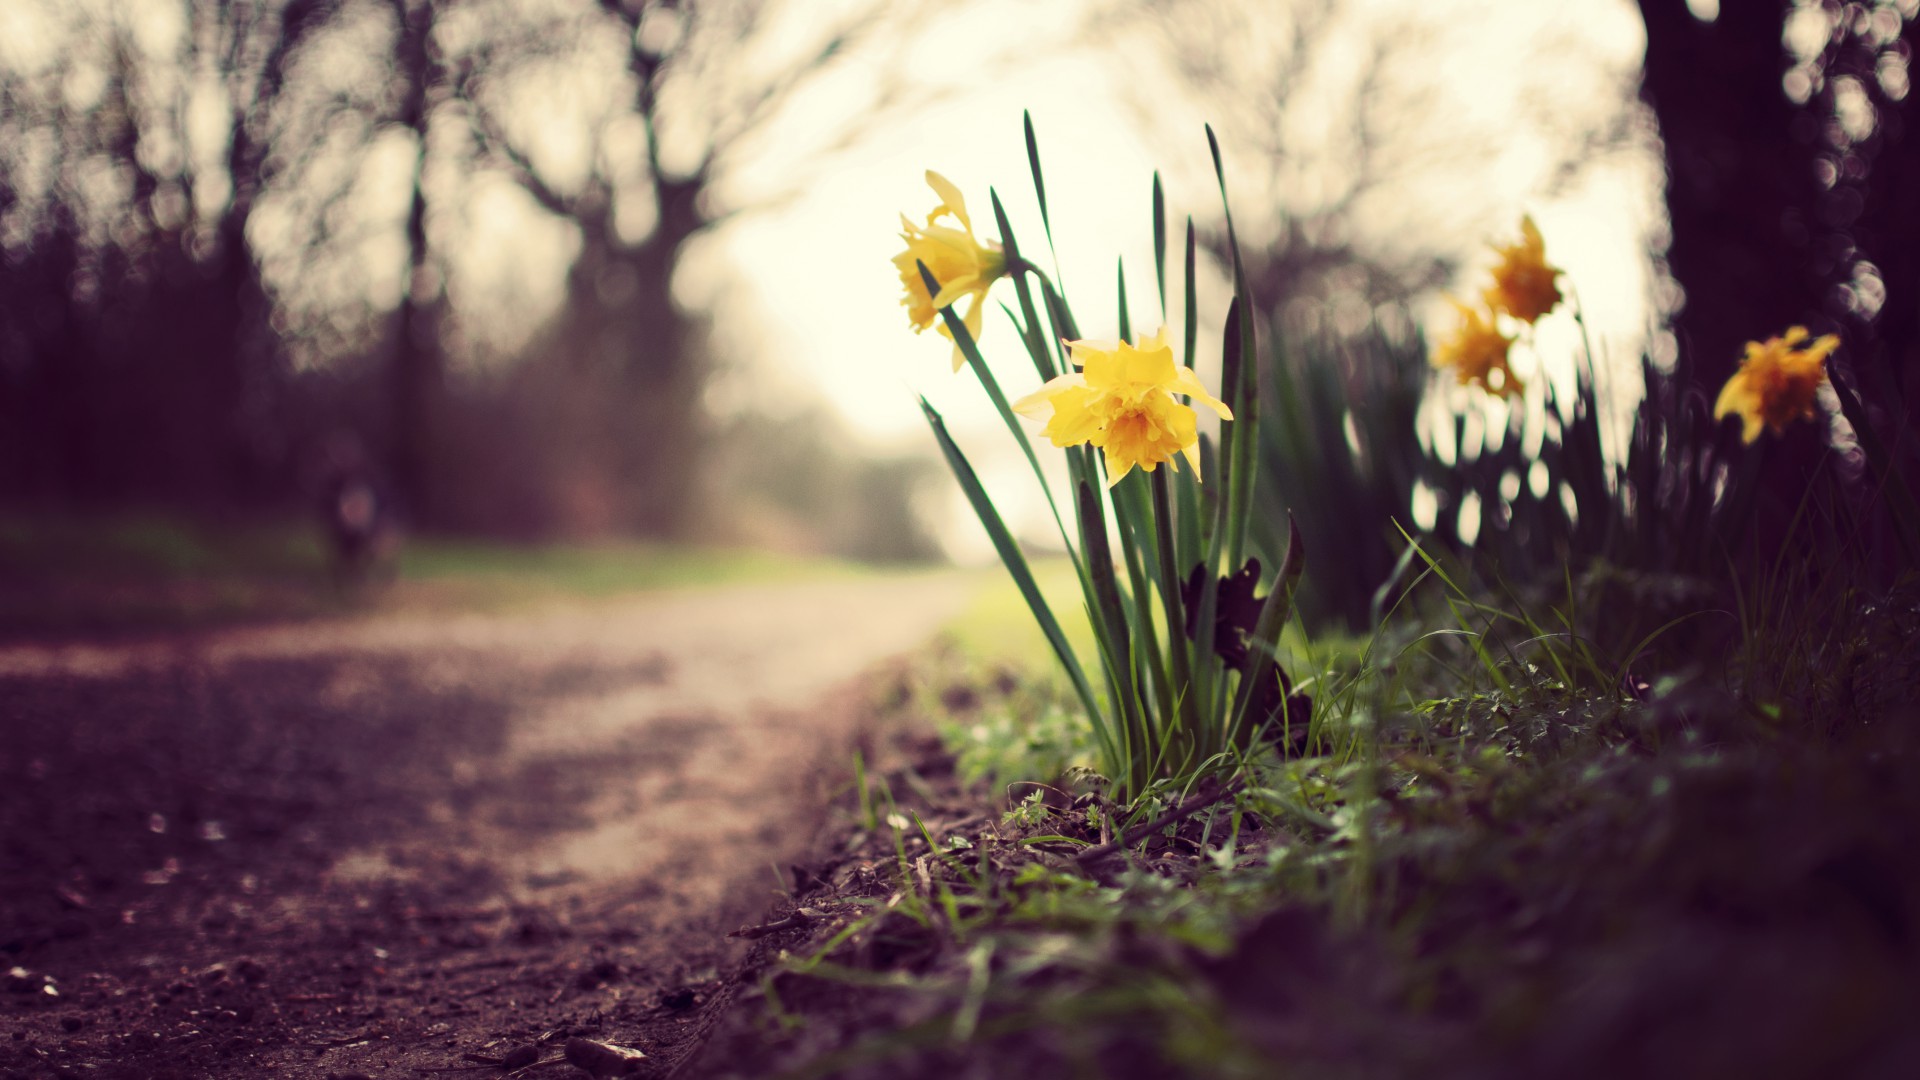 Нарциссы, 5k, 4k, цветы, весна, природа, Daffodils, 5k, 4k wallpaper, flowers, spring, nature (horizontal)